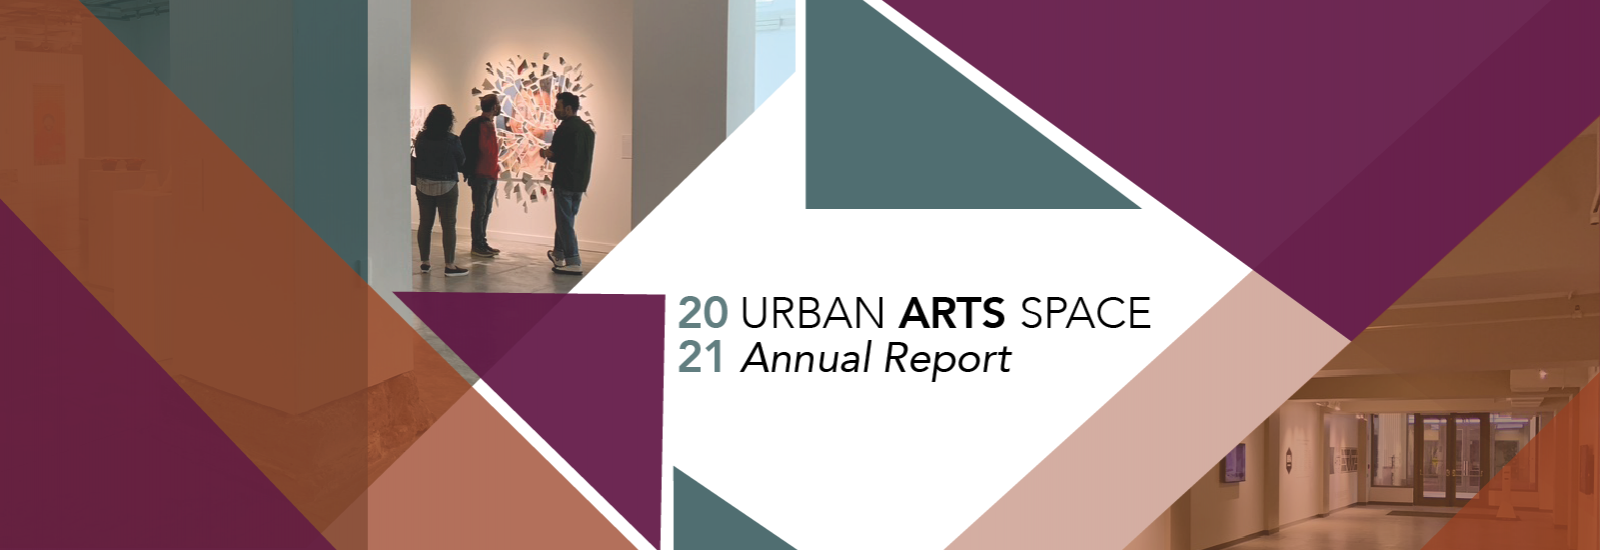 Urban Arts Space Annual Report graphic